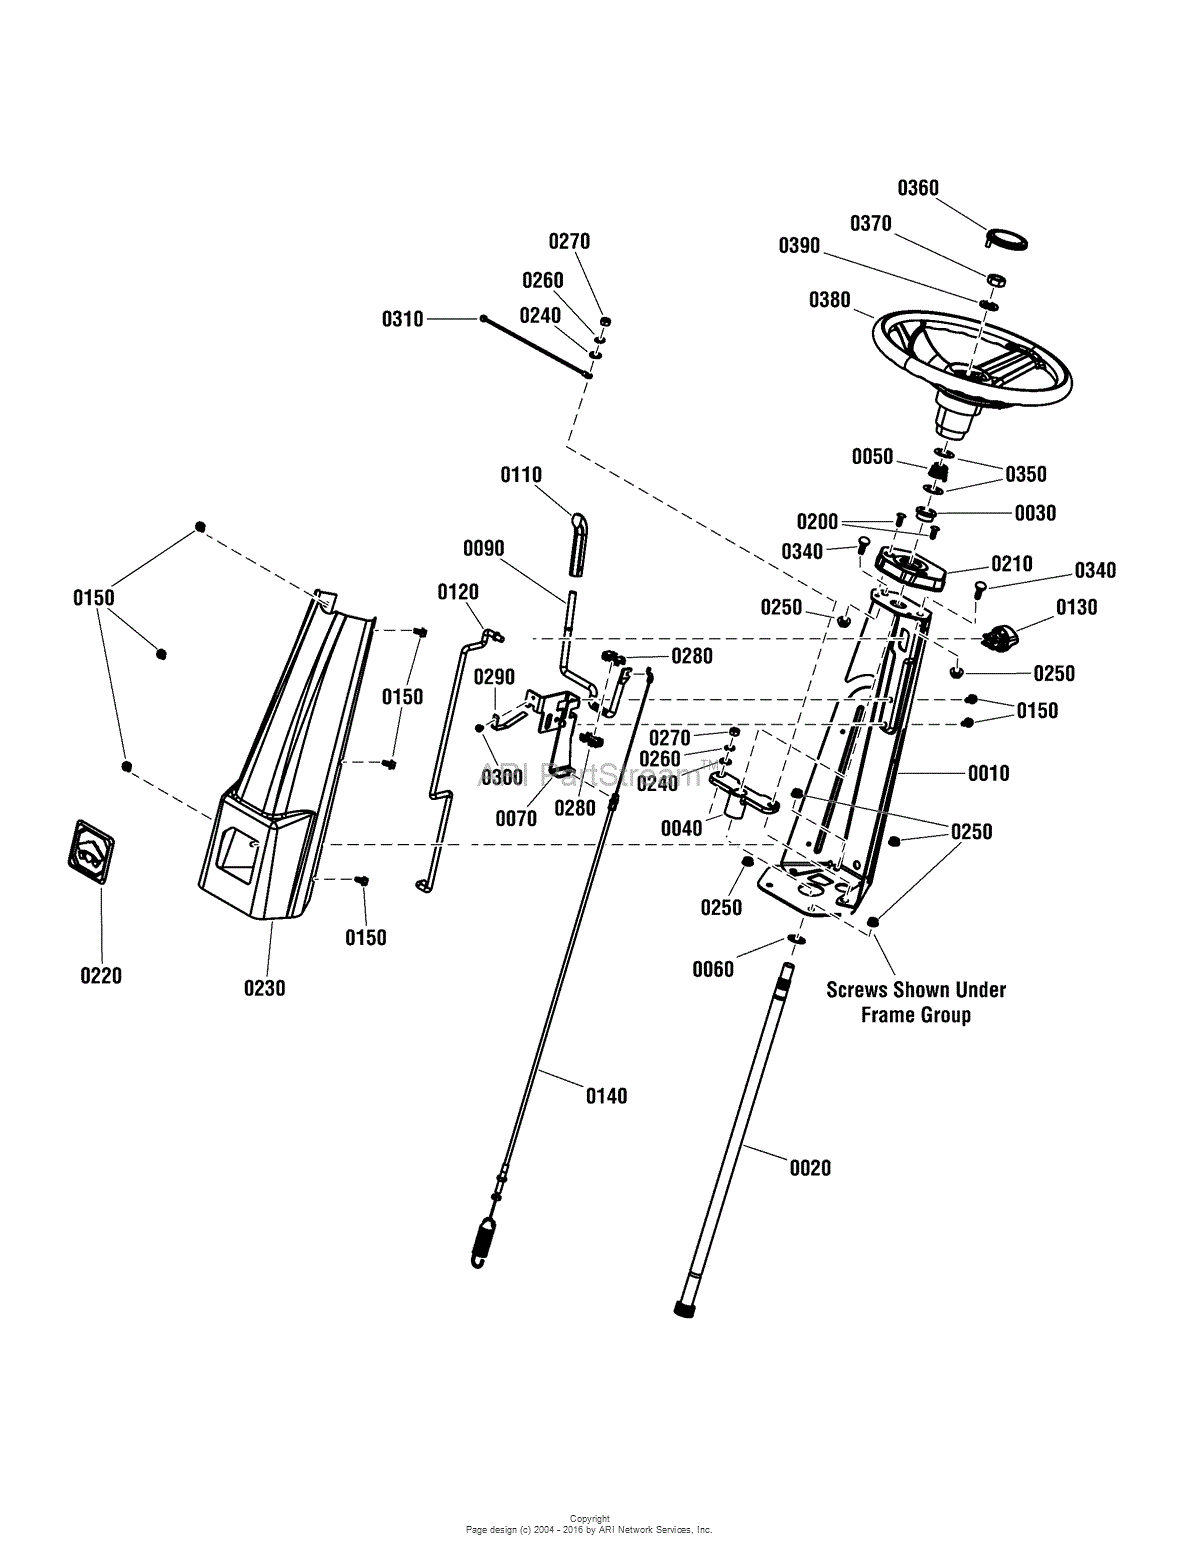 huskee 12-40 wiring diagram